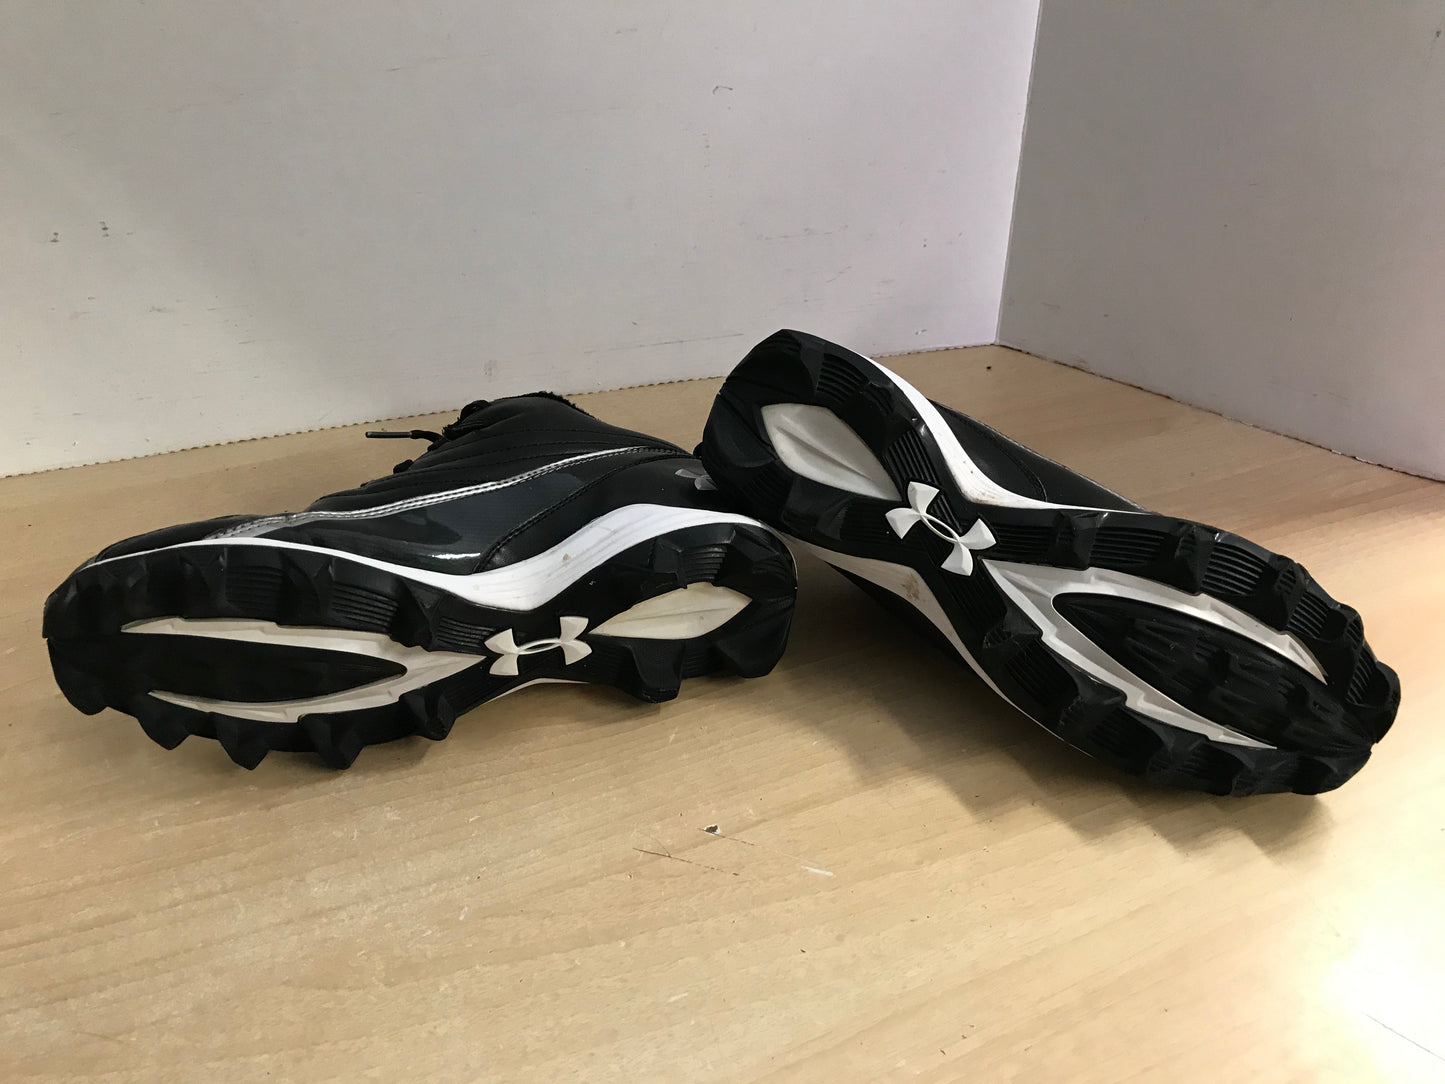 Baseball Shoes Cleats Men's Size 9 Umbro  Black Silver Minor Wear